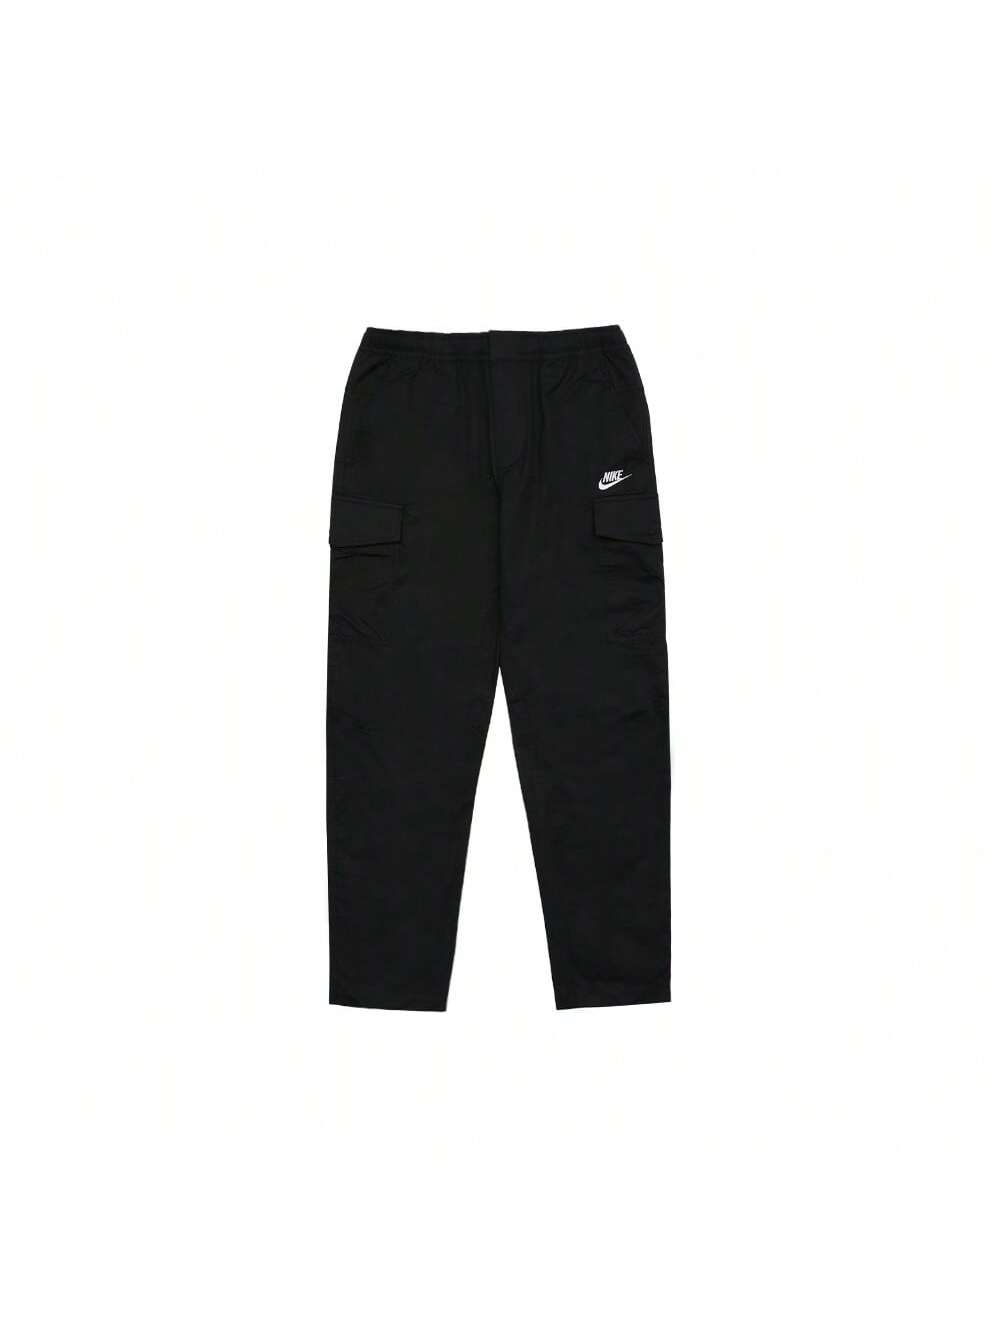 брюки nike bv6877 010 размер s черный белый Мужские брюки-карго без подкладки Nike DD5207-010 тканые брюки Club NSW, черный